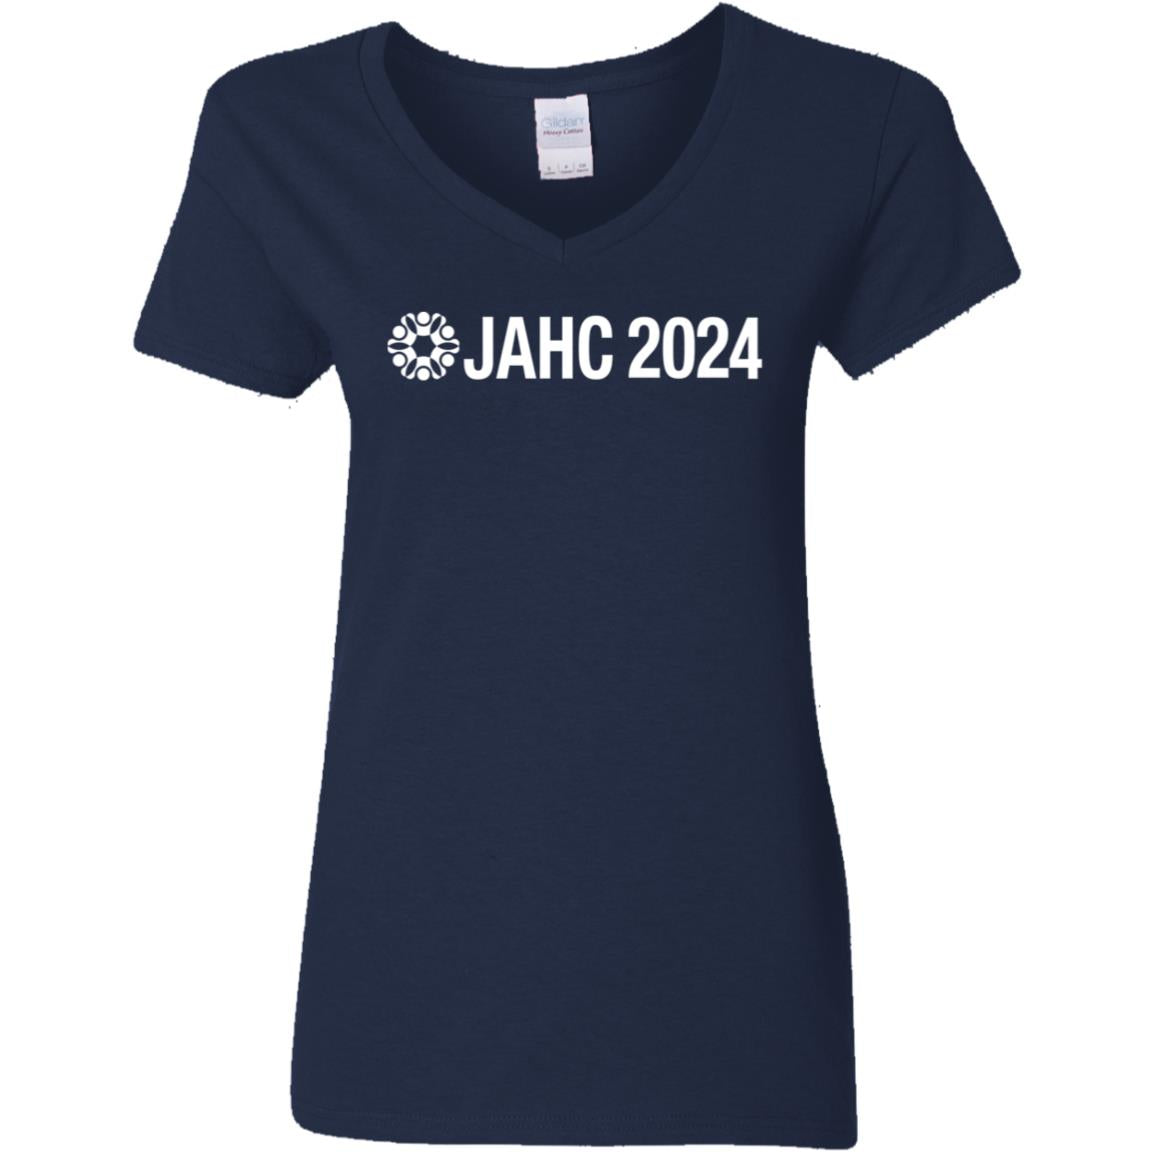 JAHC 2024 Women's V-Neck T-Shirt - Multiple Colors